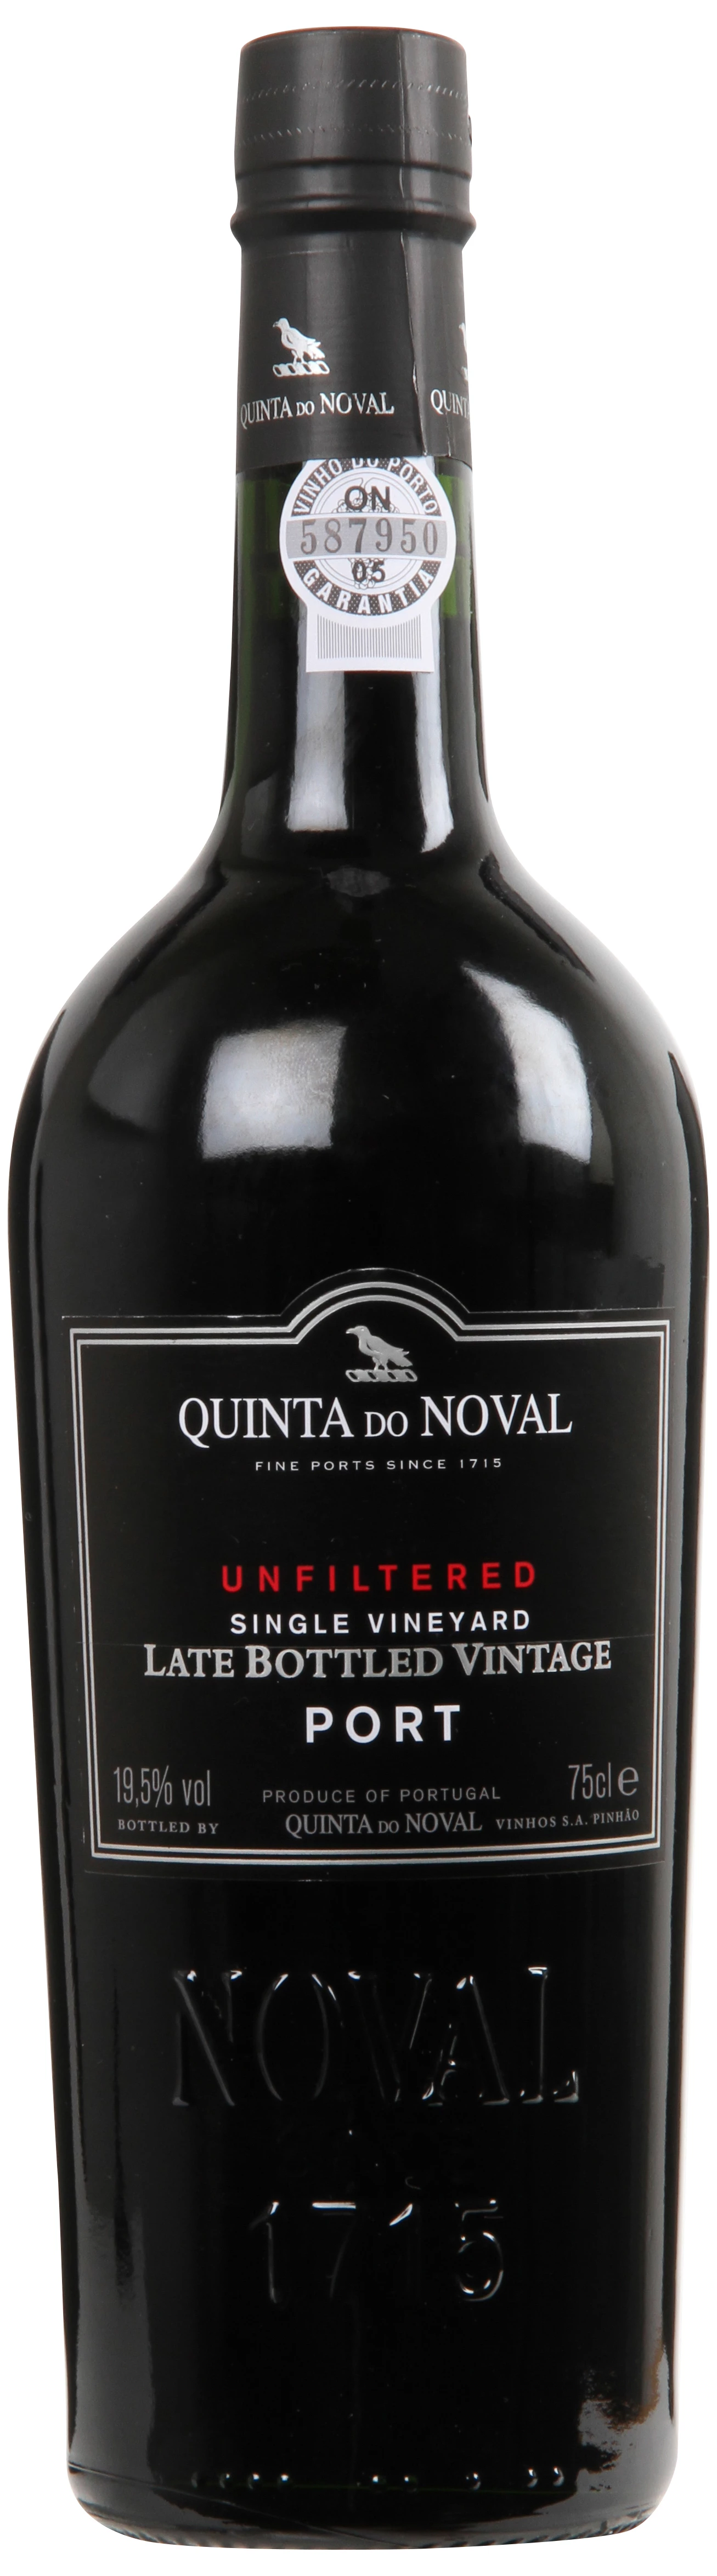 Løgismose Portvin Quinta do Noval LBV Port Unfiltered Single Vineyard 2011 - 200106